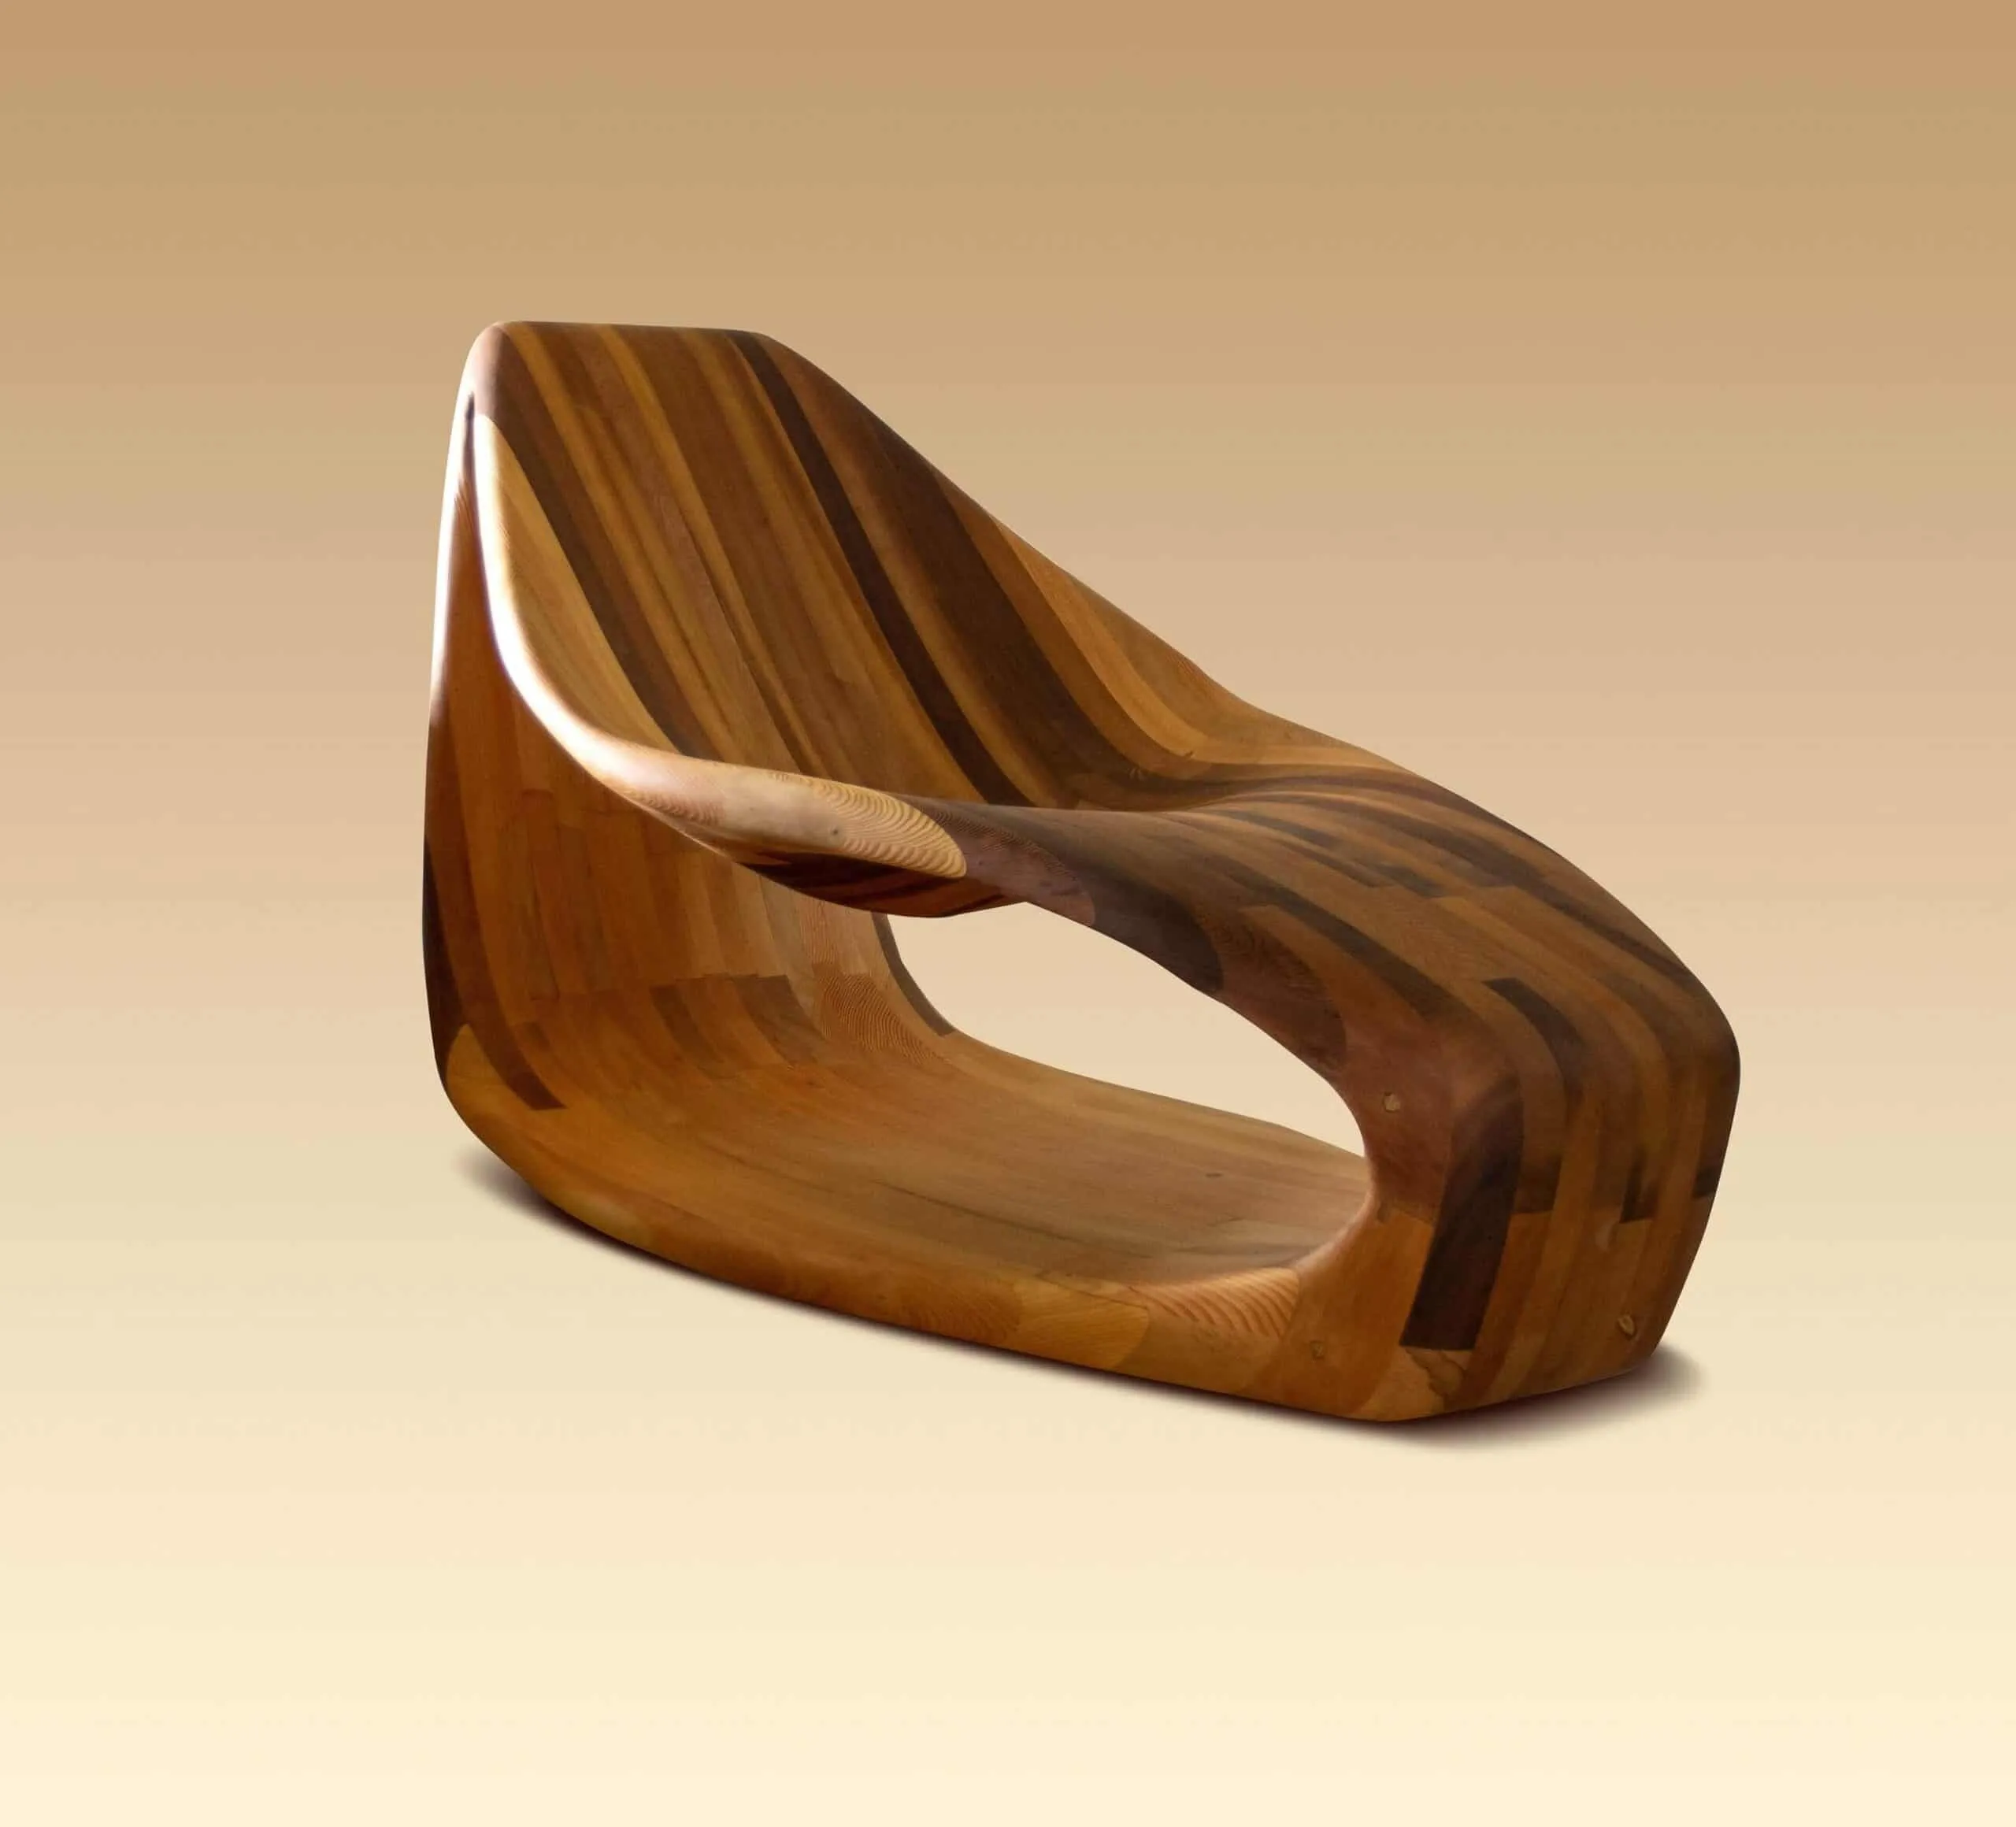 petal chair made from western hemlock, wood furniture